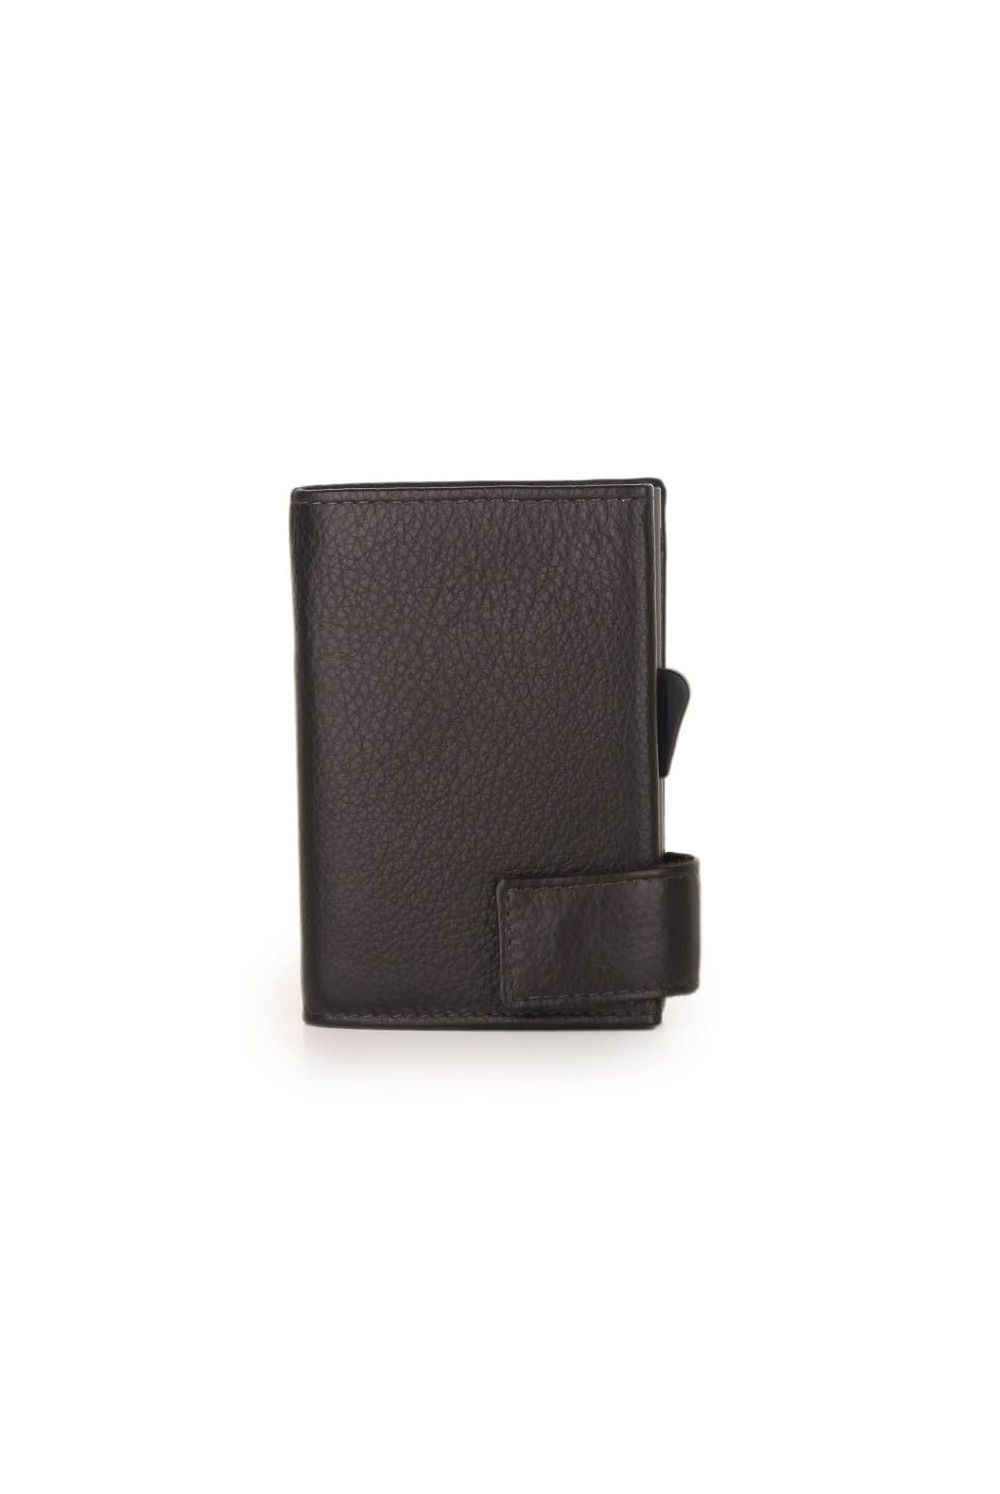 SecWal Card Case DK Leather dark Brown